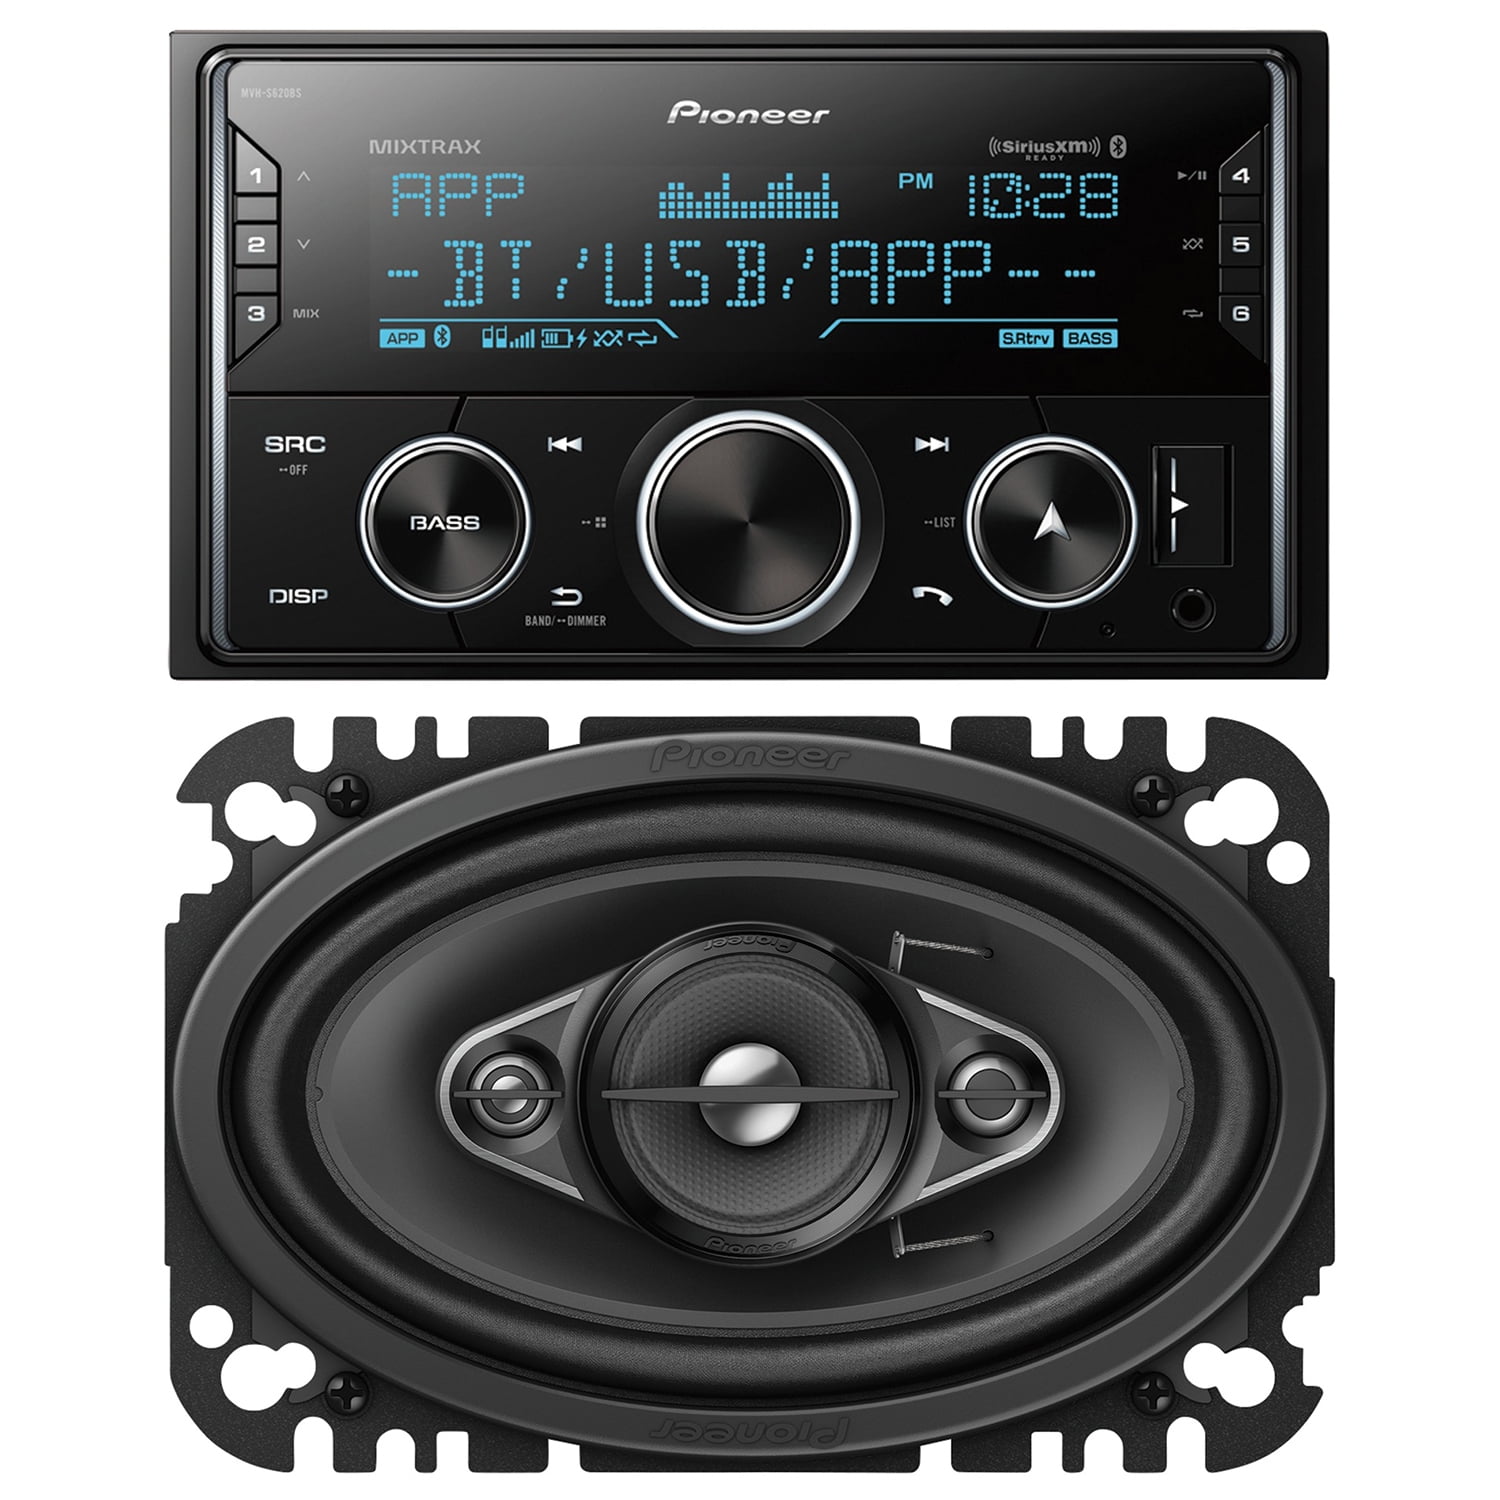 NEW Pioneer MVH-S620BS Double DIN MP3/WMA Digital Media Player Bluetooth MIXTRAX 